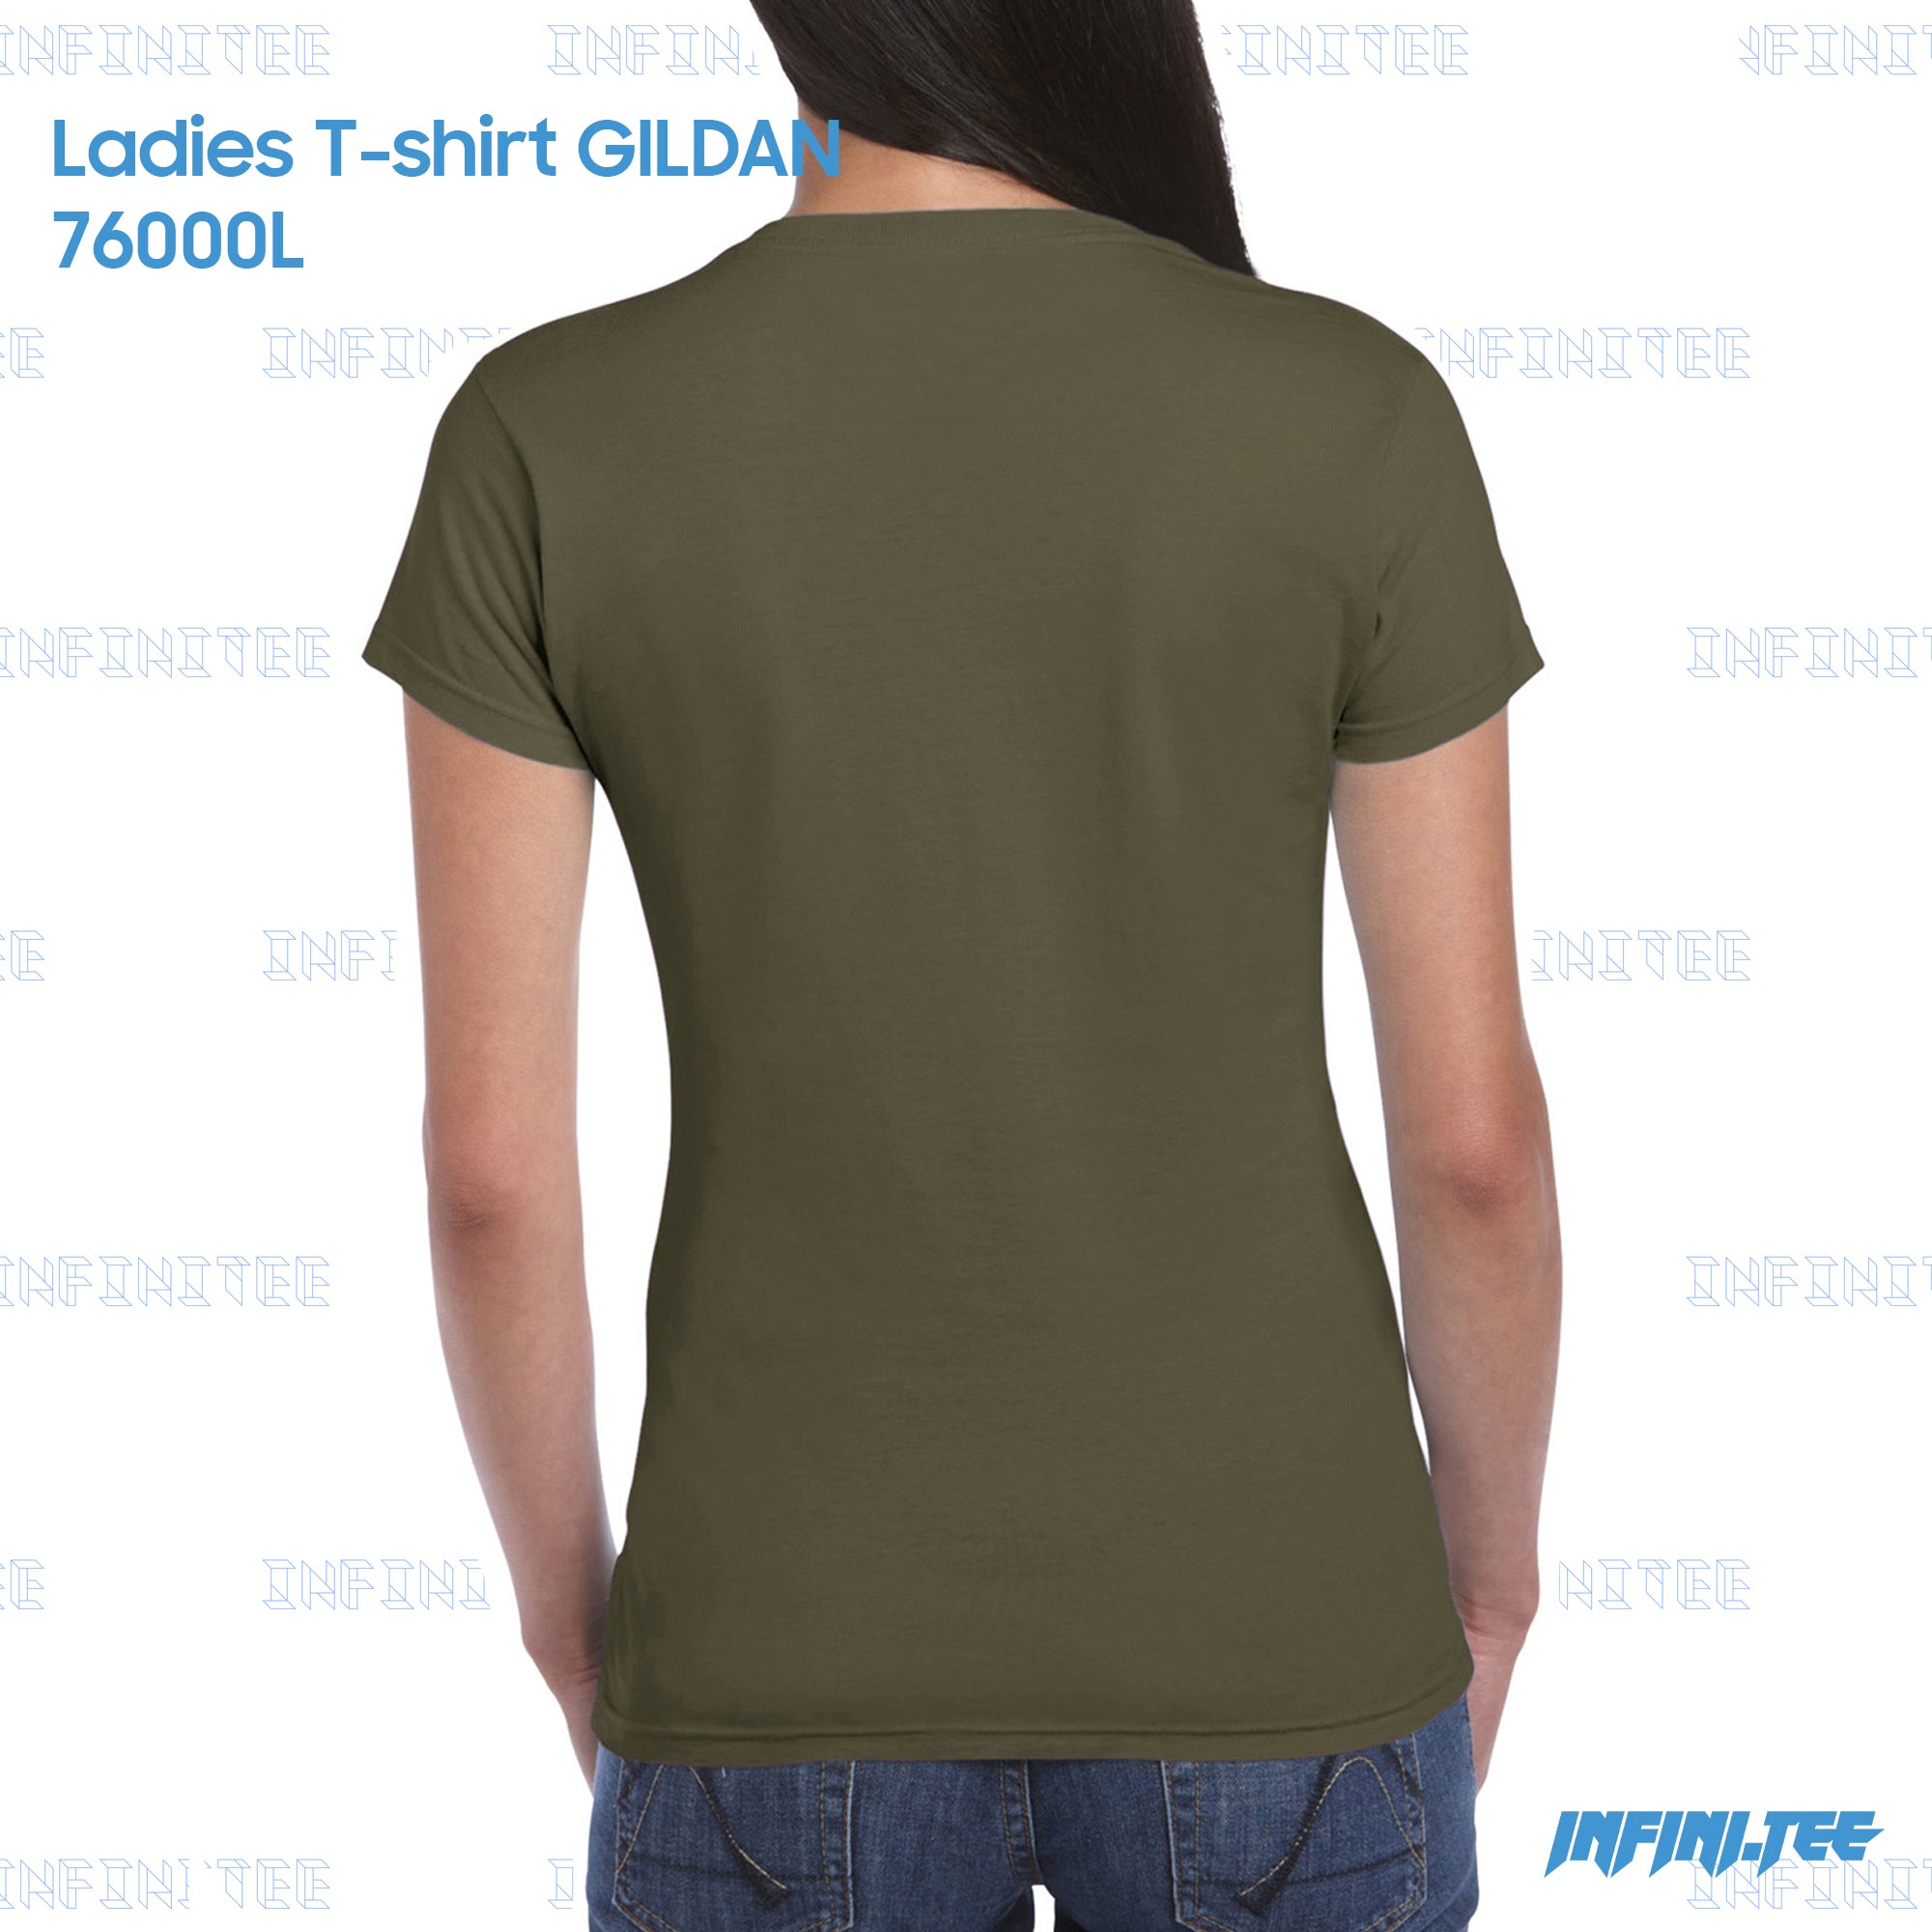 Ladies T-shirt 76000L GILDAN - MILITARY GREEN